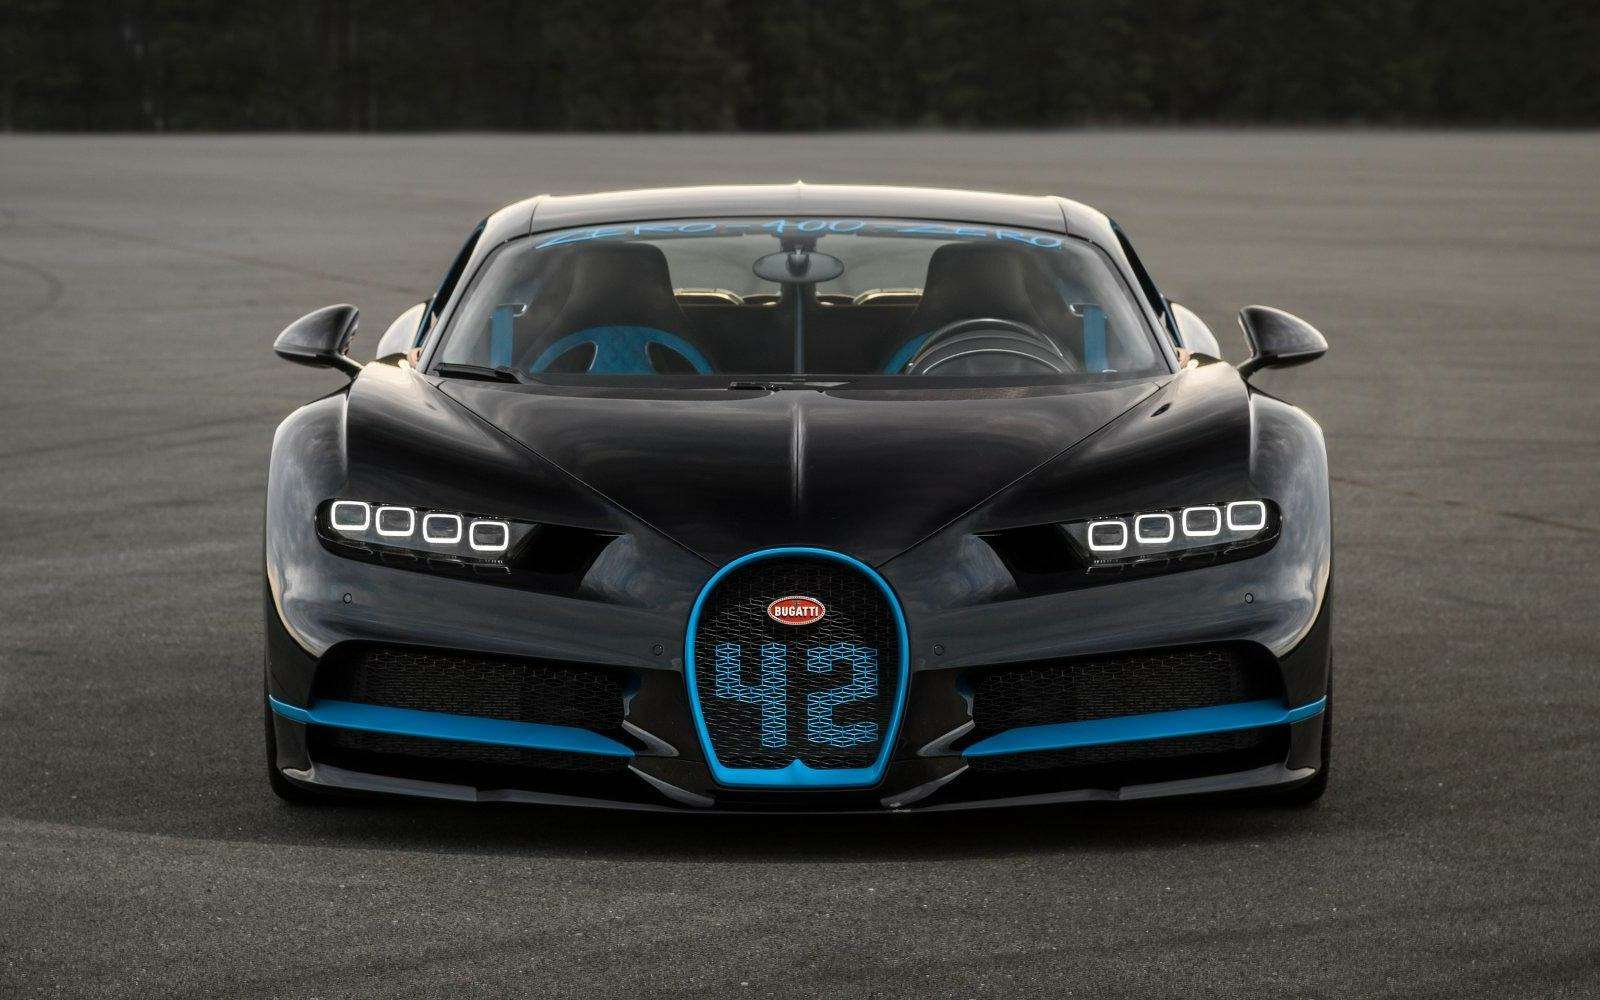 0-400-0 км/ч — видео рекордного заезда Bugatti Chiron — фото 794902